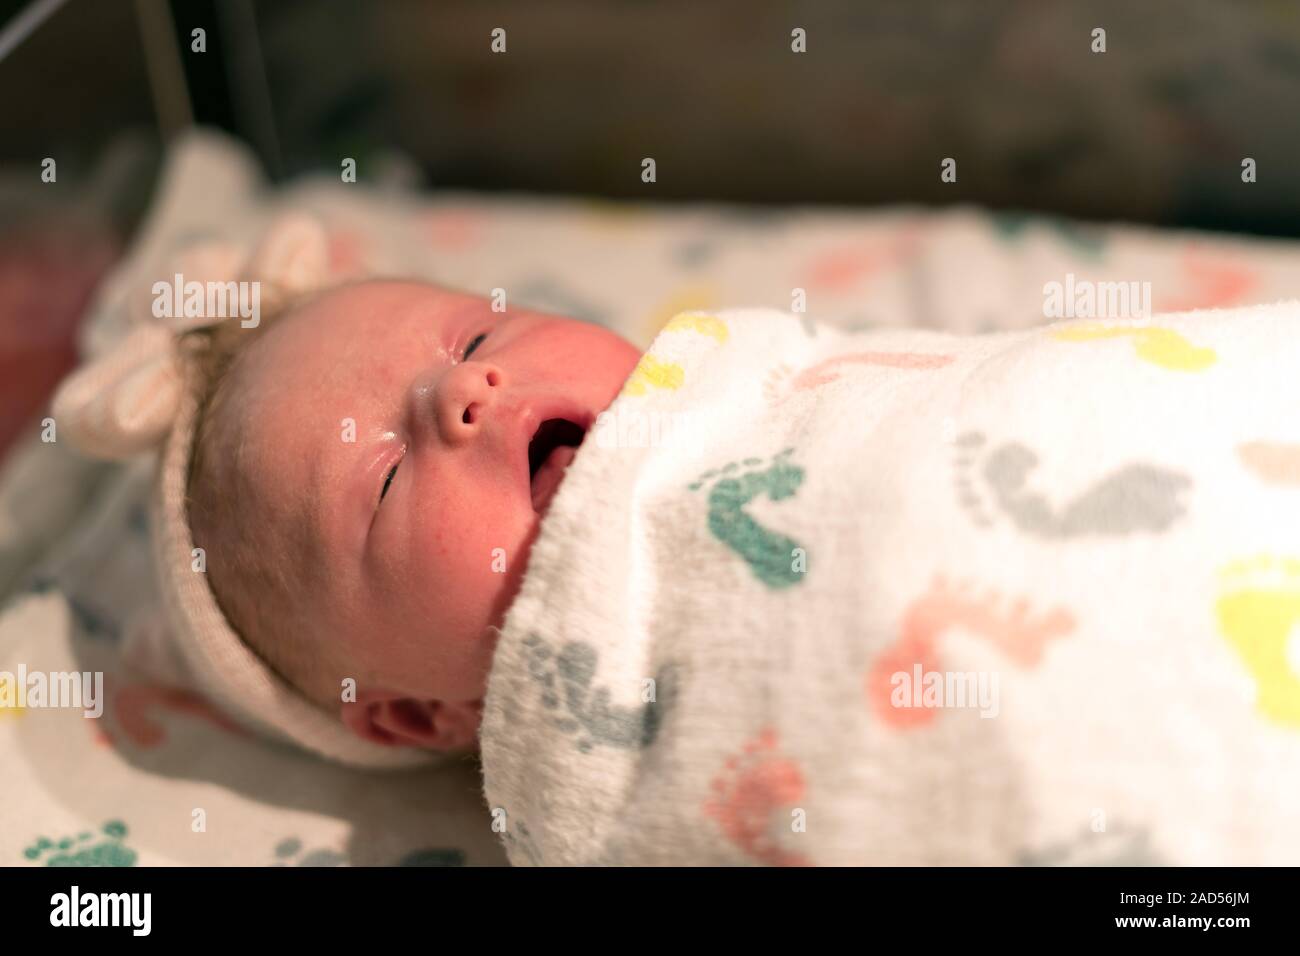 Newborn Baby in Hospital, Sleepy and Yawning Stock Photo